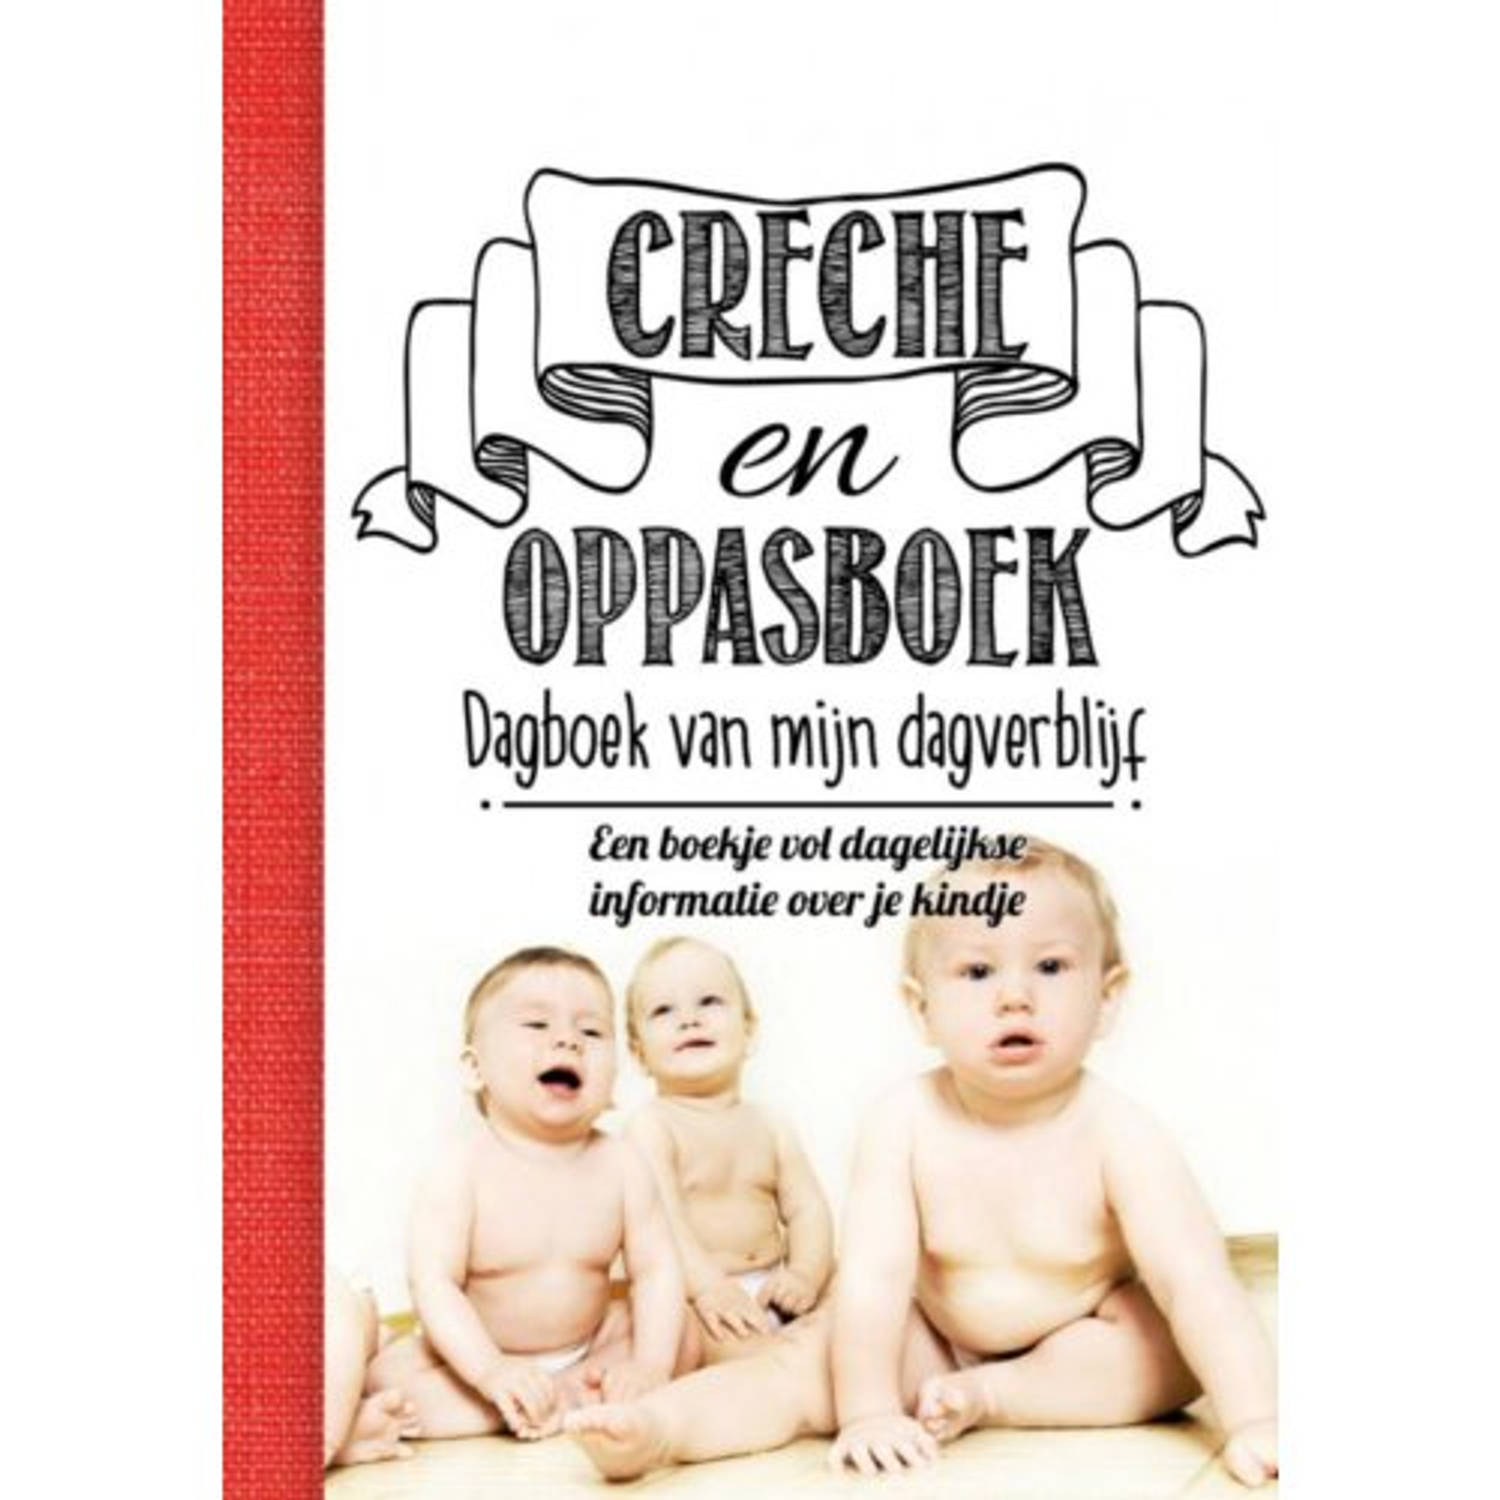 BookSpot Creche & oppasboek